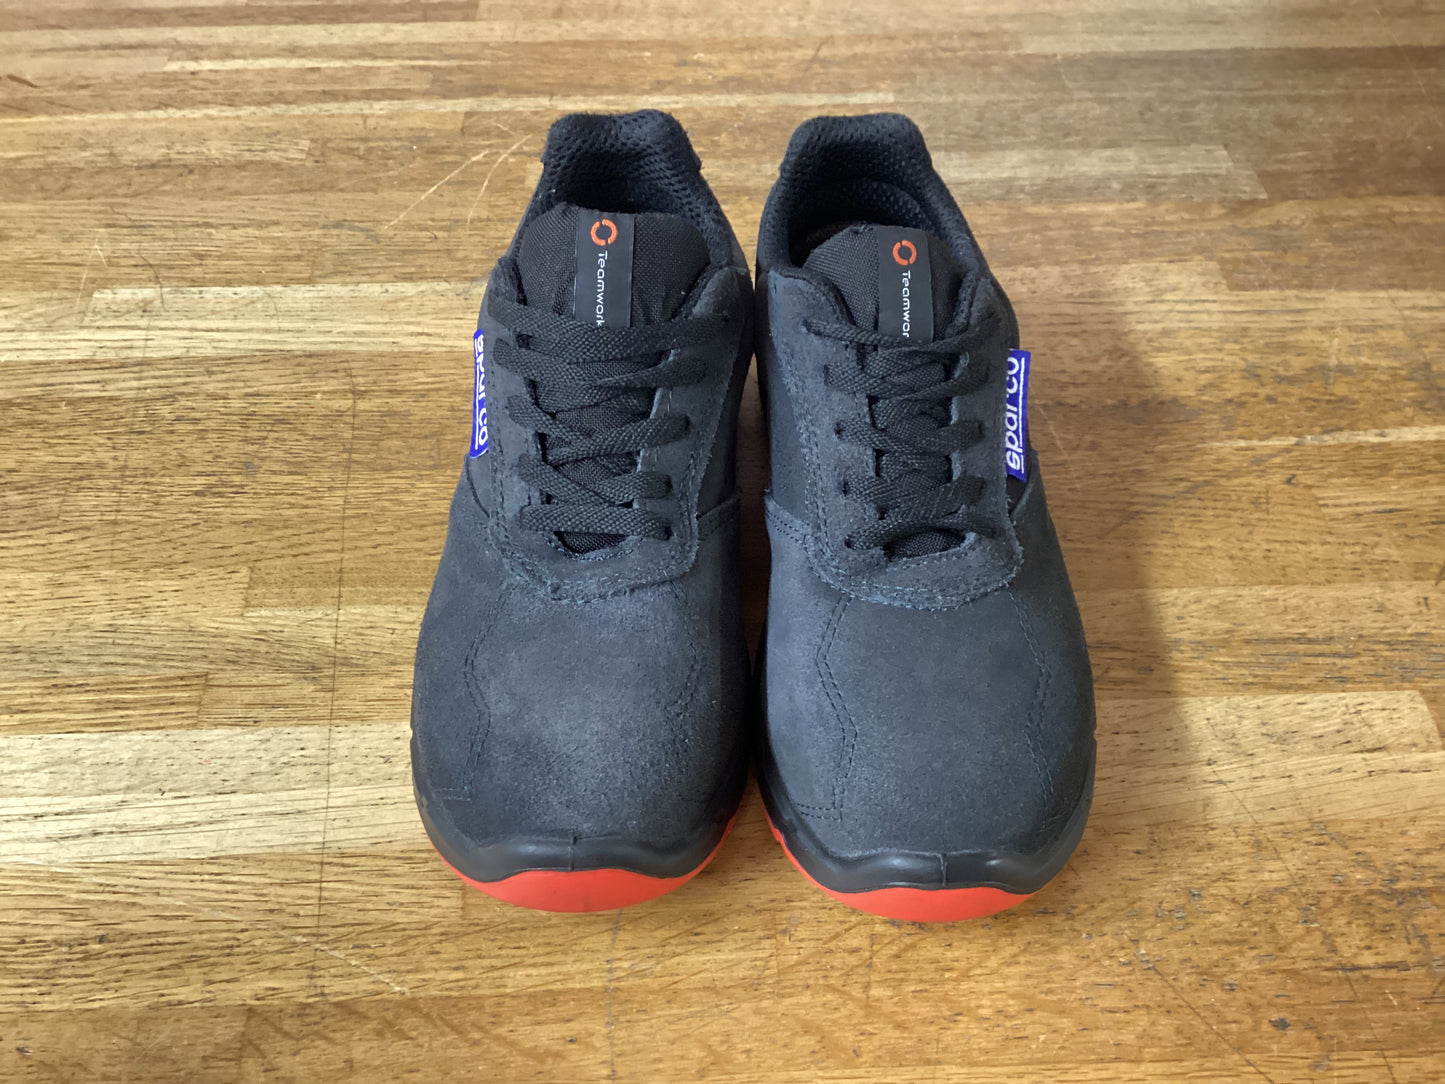 Sparco Challenge Safety Footwear, Black Trainer Shoes, UK4.5/EU 37